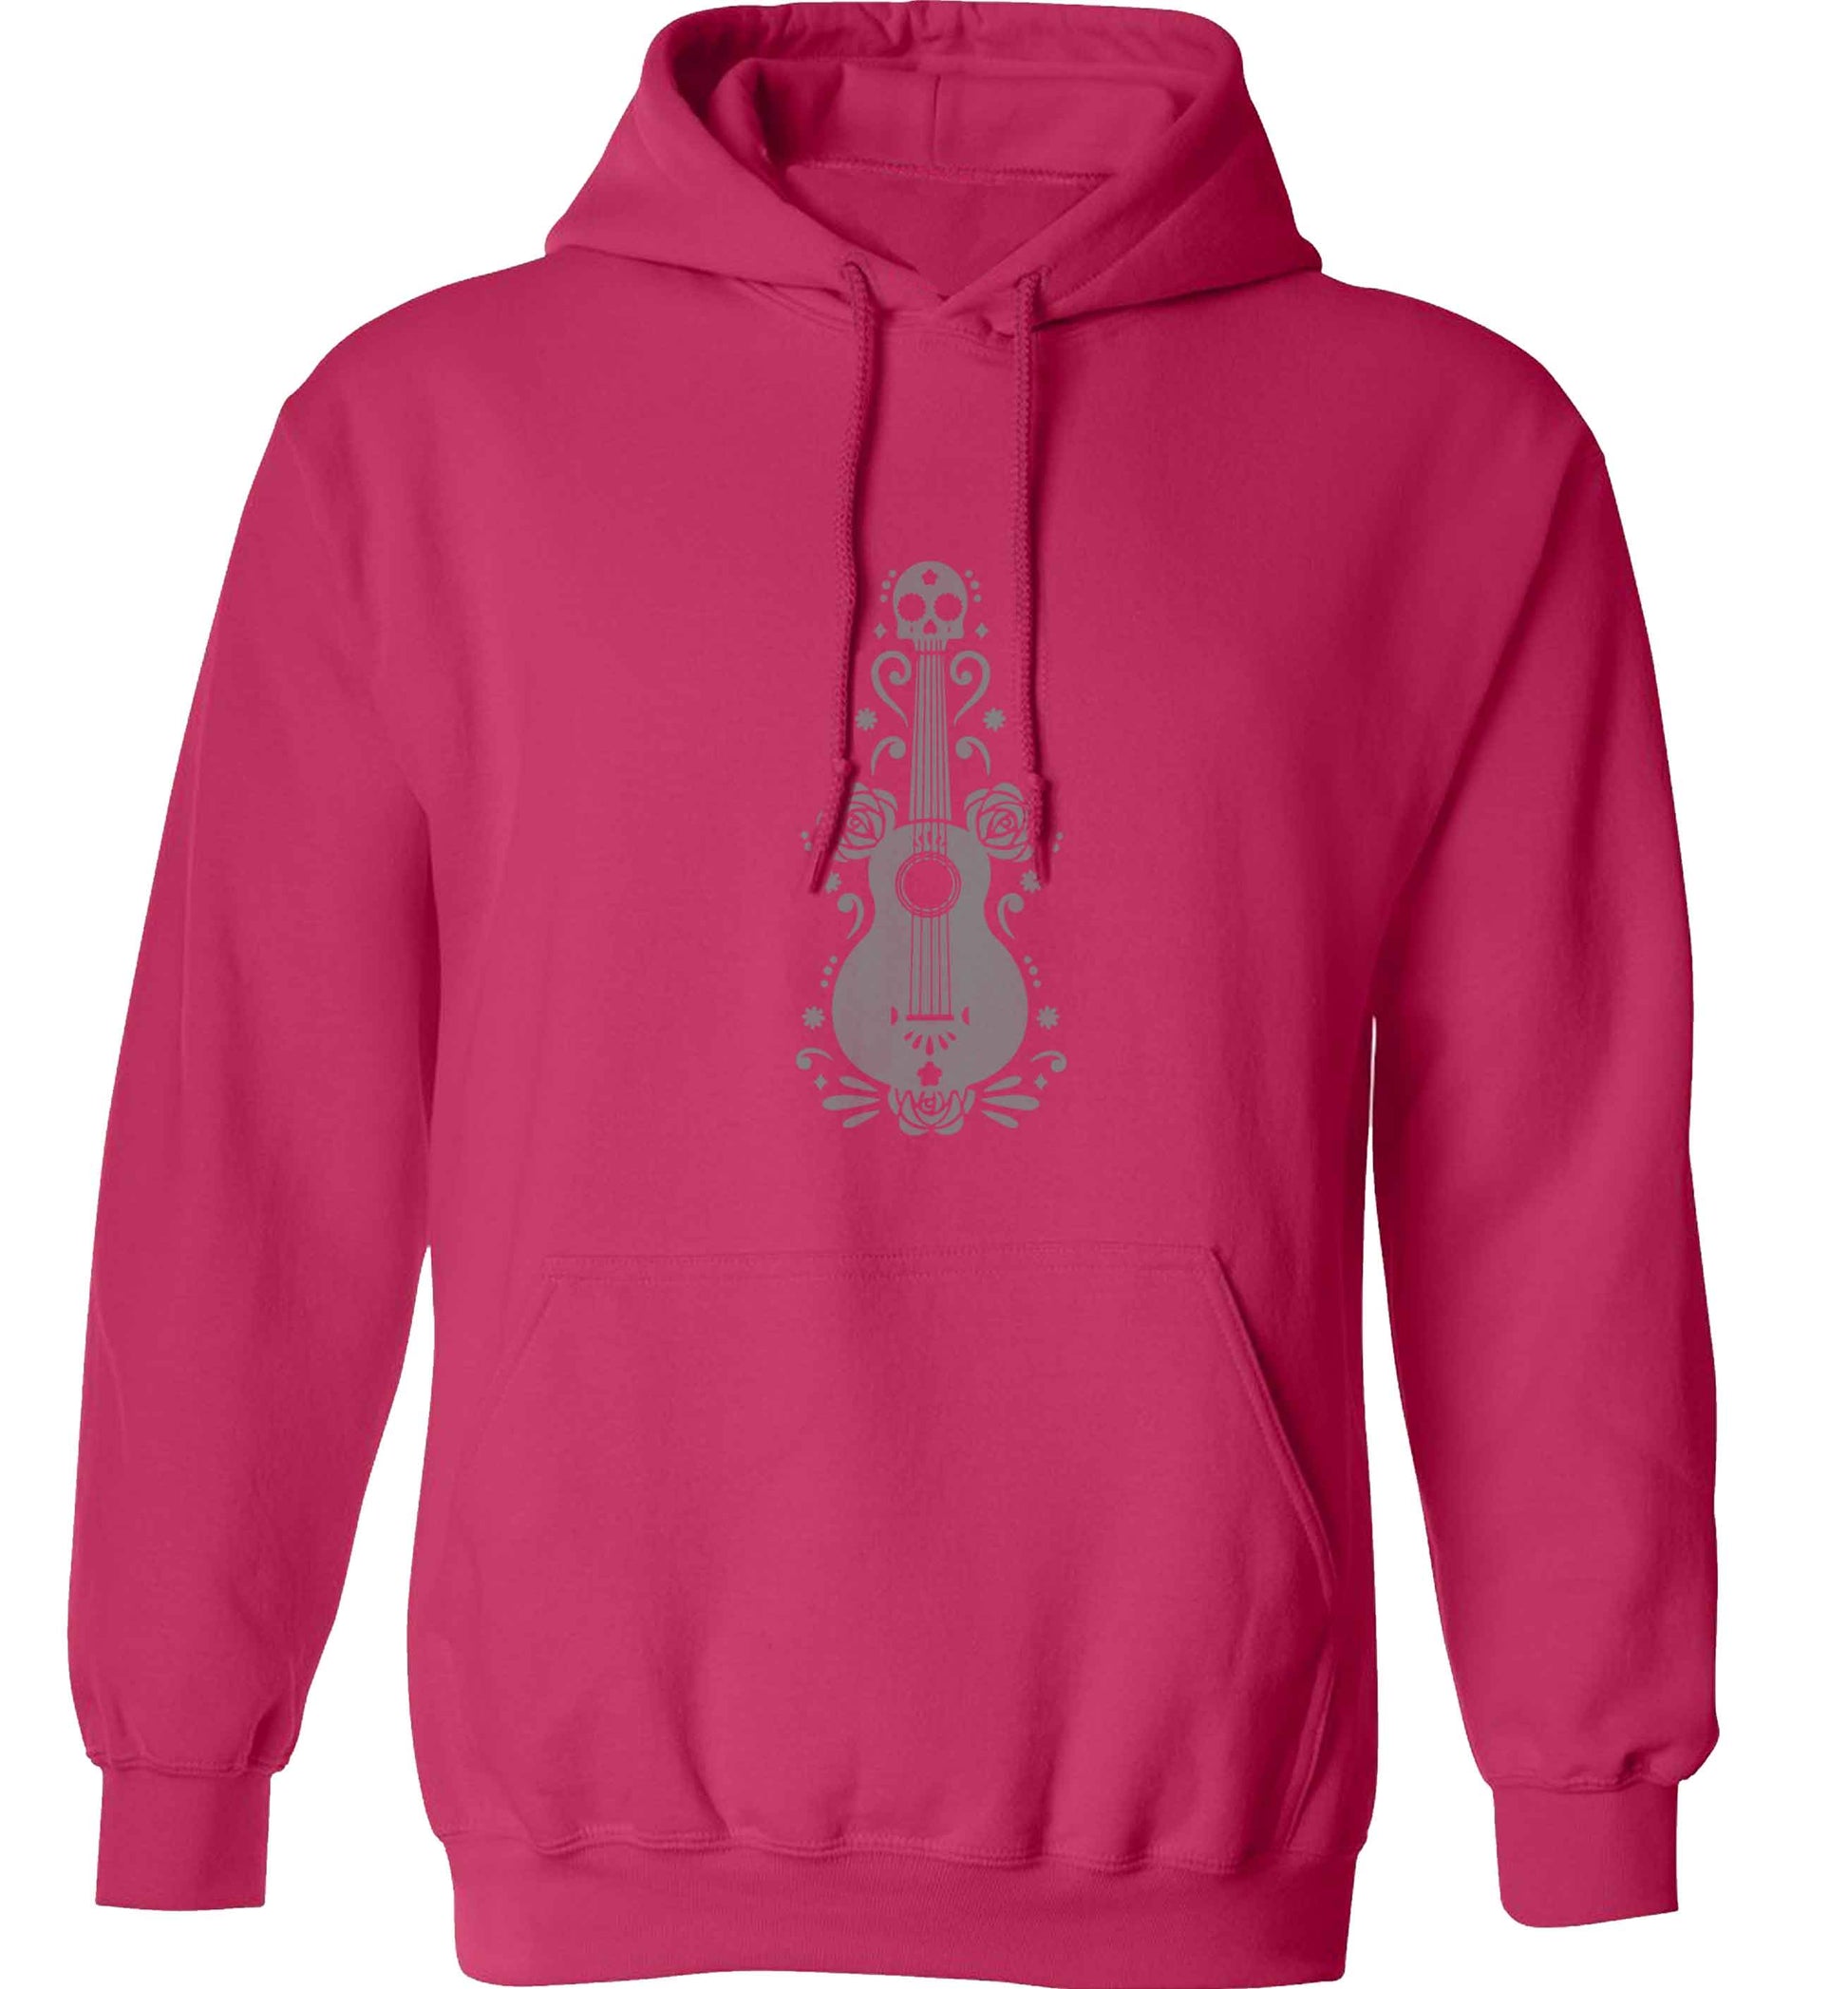 Guitar skull illustration adults unisex pink hoodie 2XL